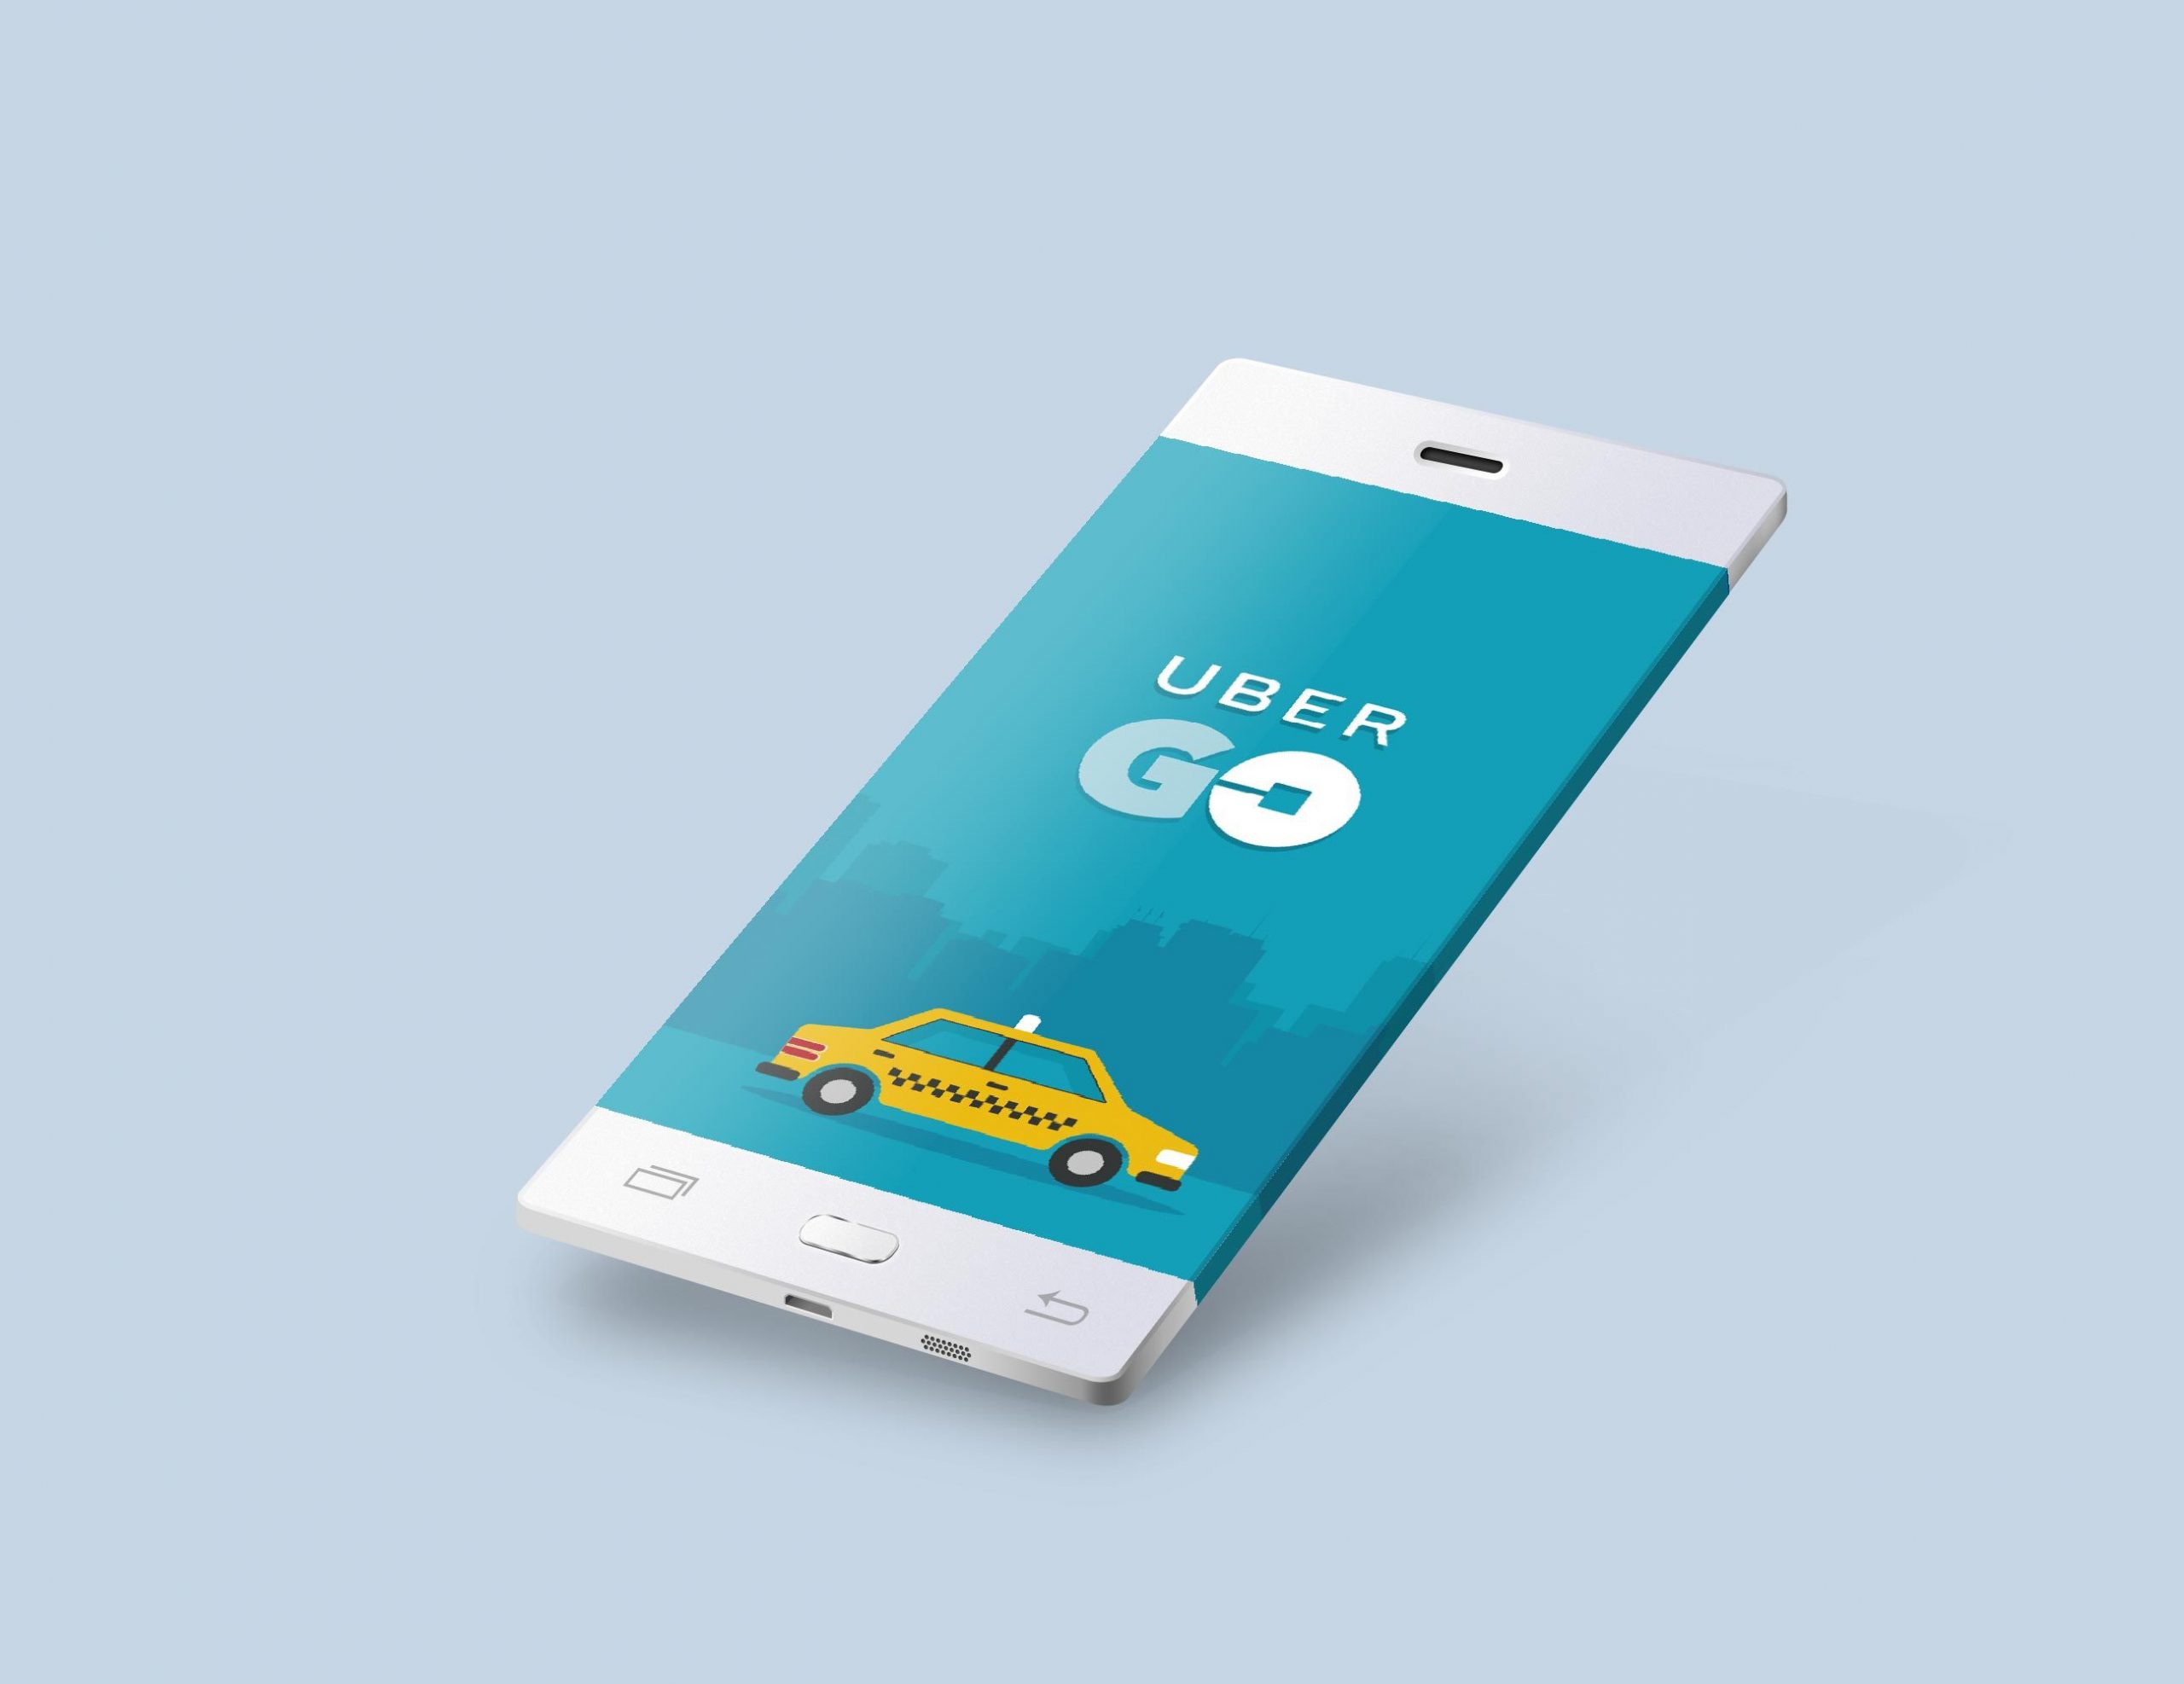 10 Major Differences between Ubergo and Uberx